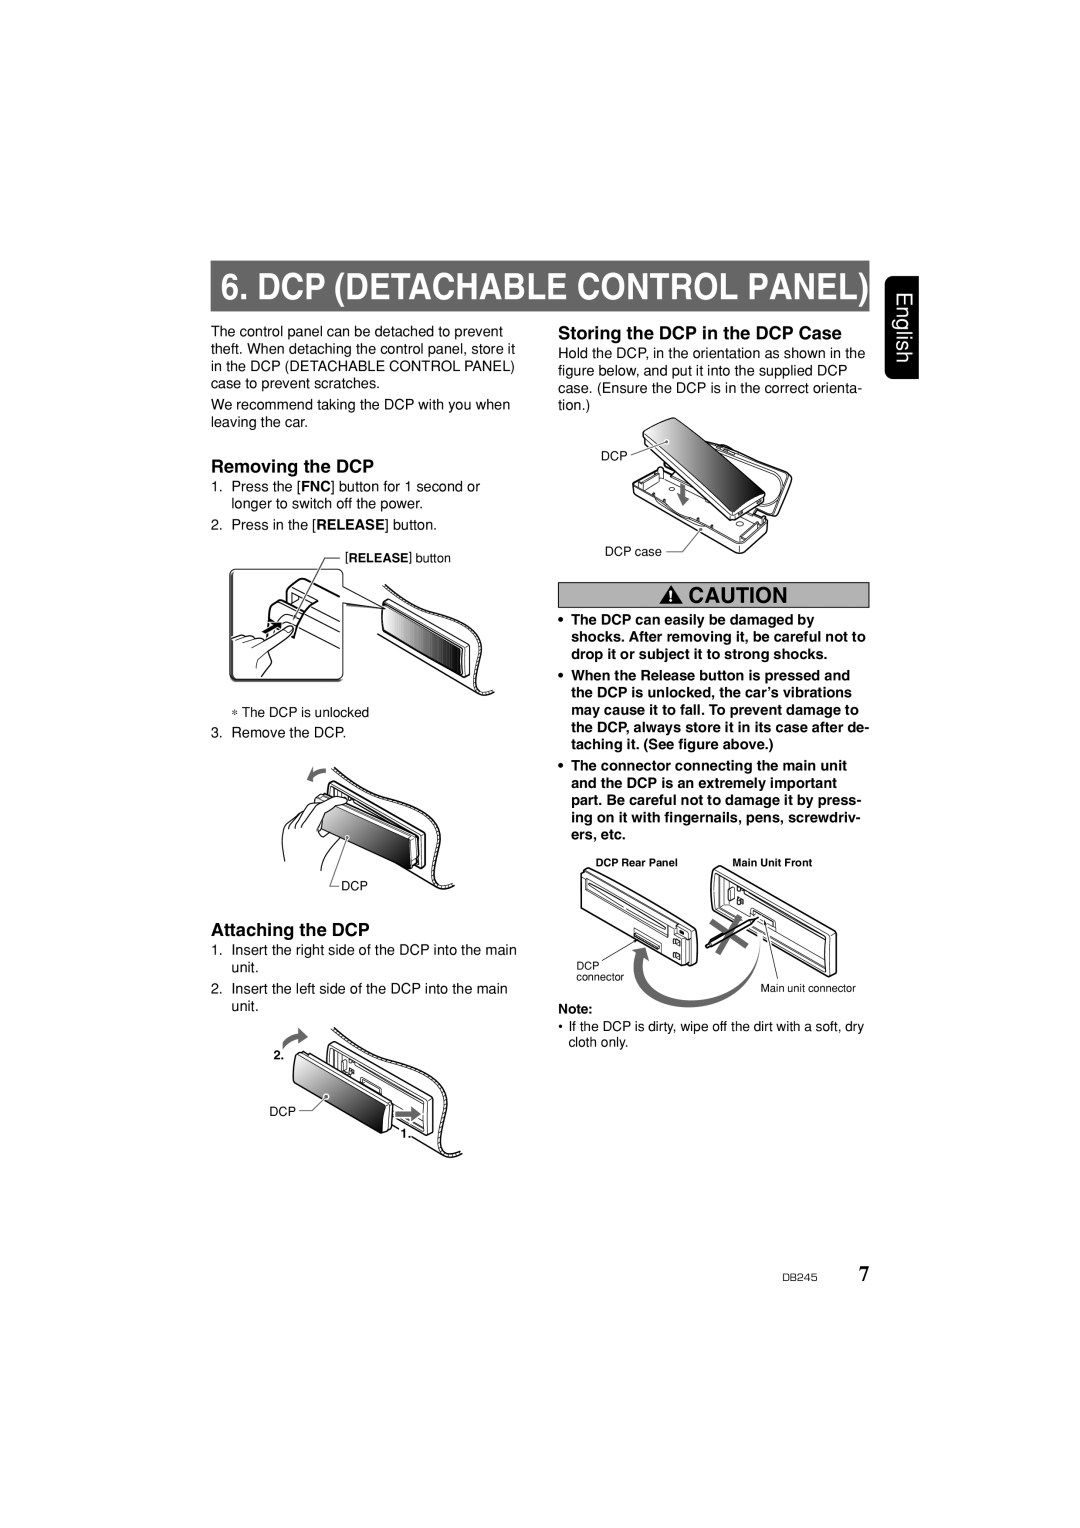 Clarion DB346MP Dcp Detachable Control Panel, Removing the DCP, Attaching the DCP, Storing the DCP in the DCP Case 